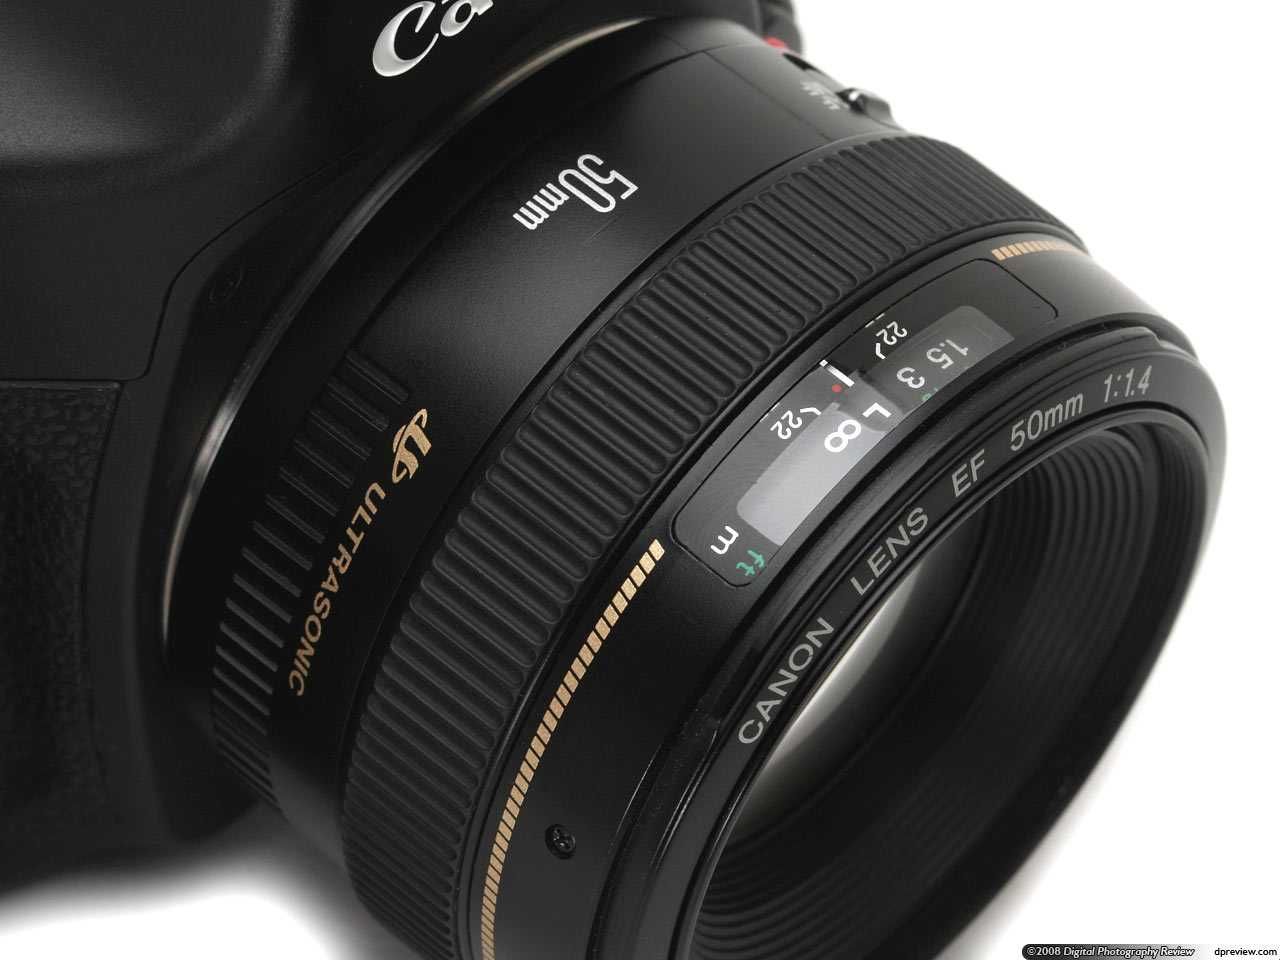 ! Canon EF 50mm F1.4 USM светлосилен нормален тих обектив + сенник !